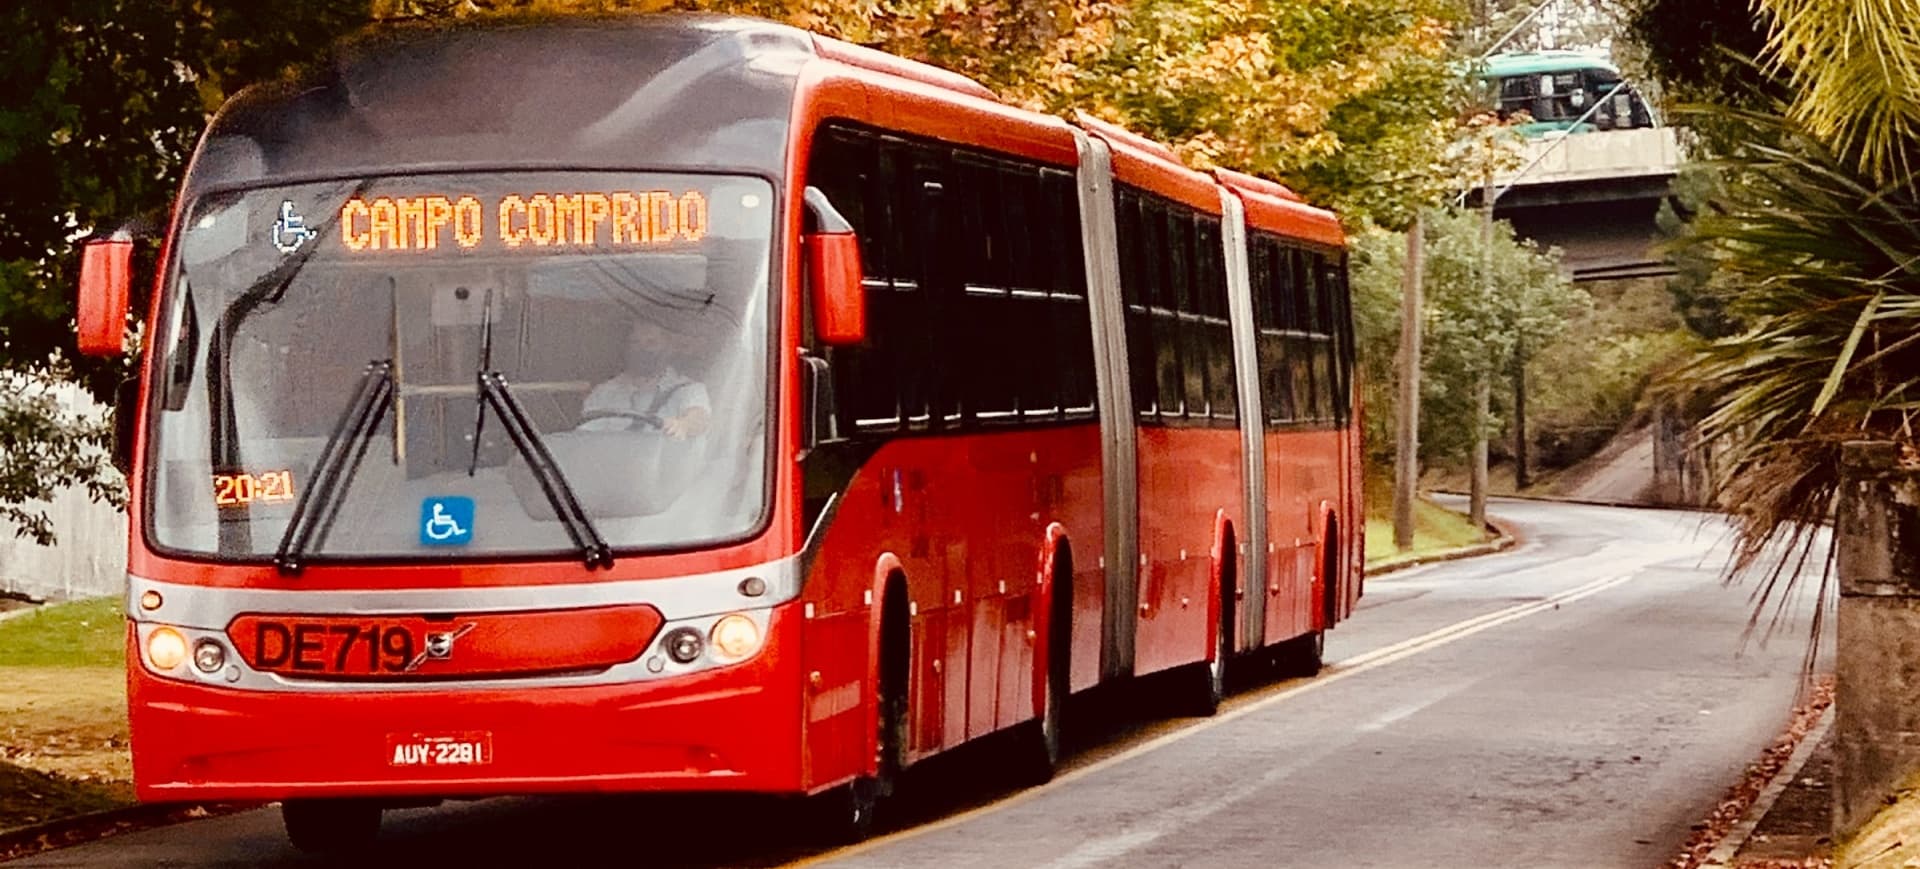 Transporte público de Curitiba